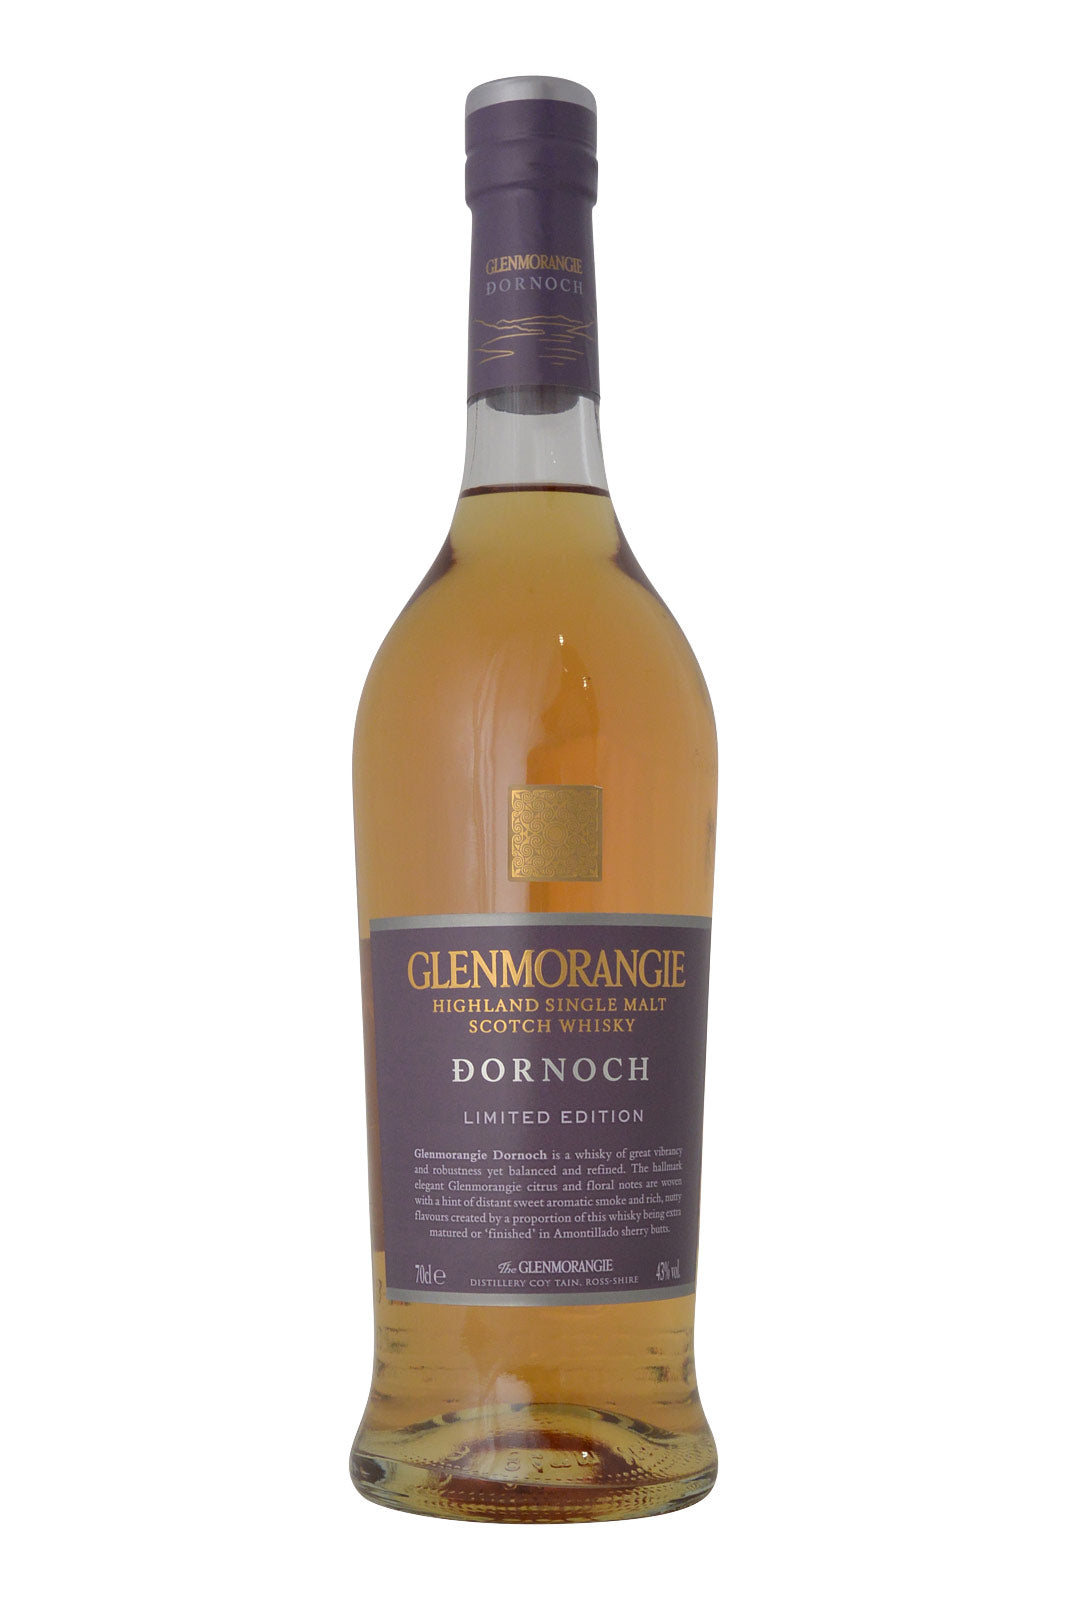 Glenmorangie Dornoch Limited Edition